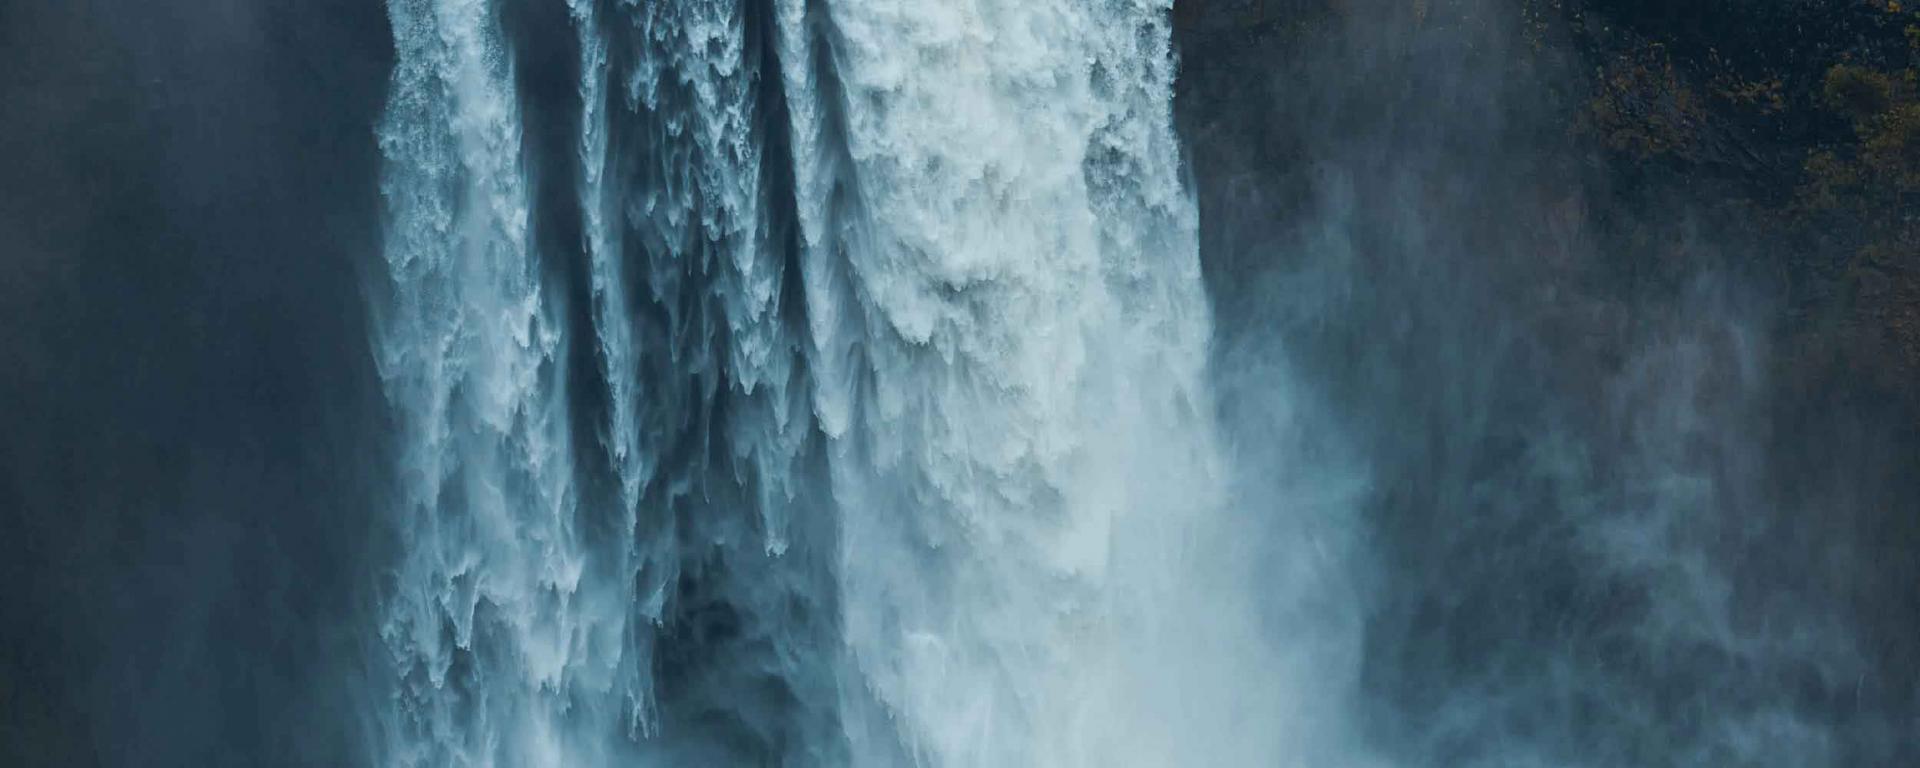 Waterfall close up